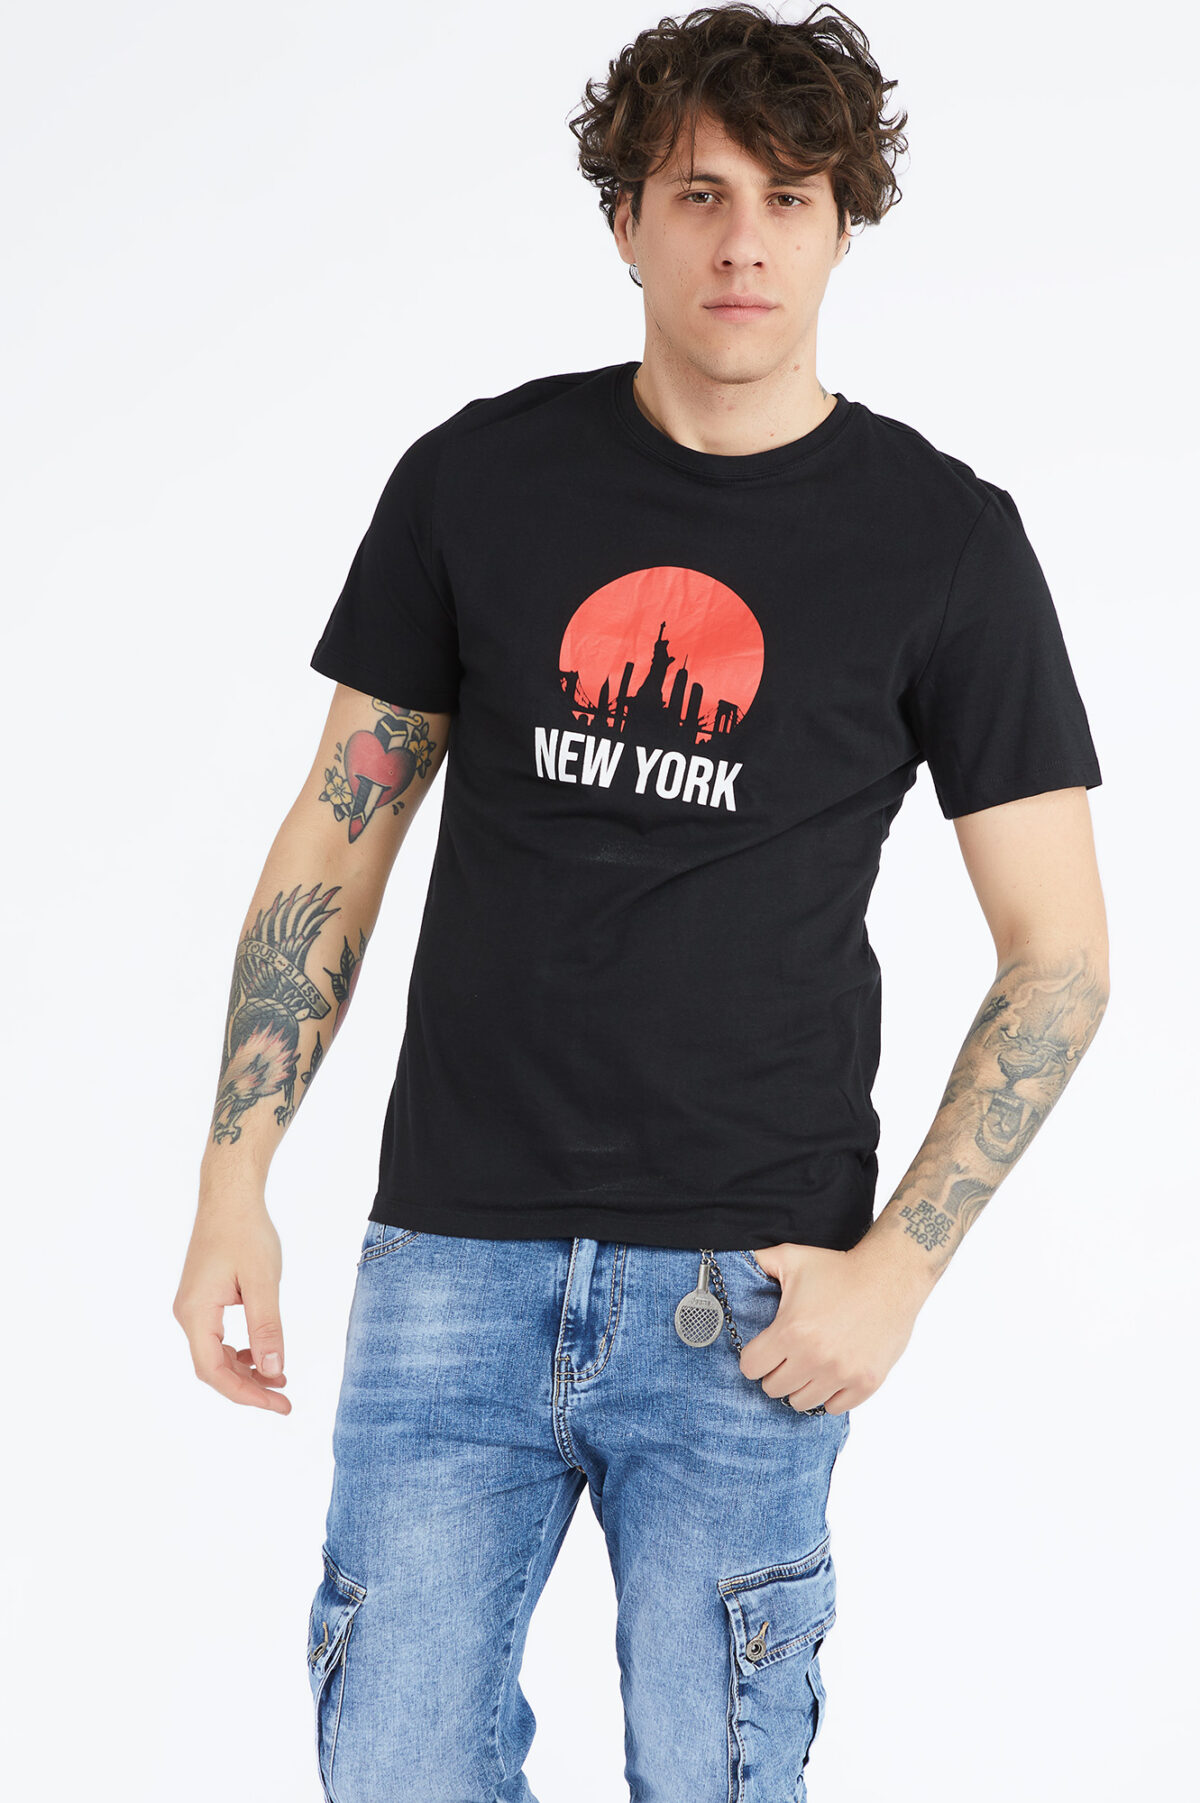 T-shirt NEW YORK